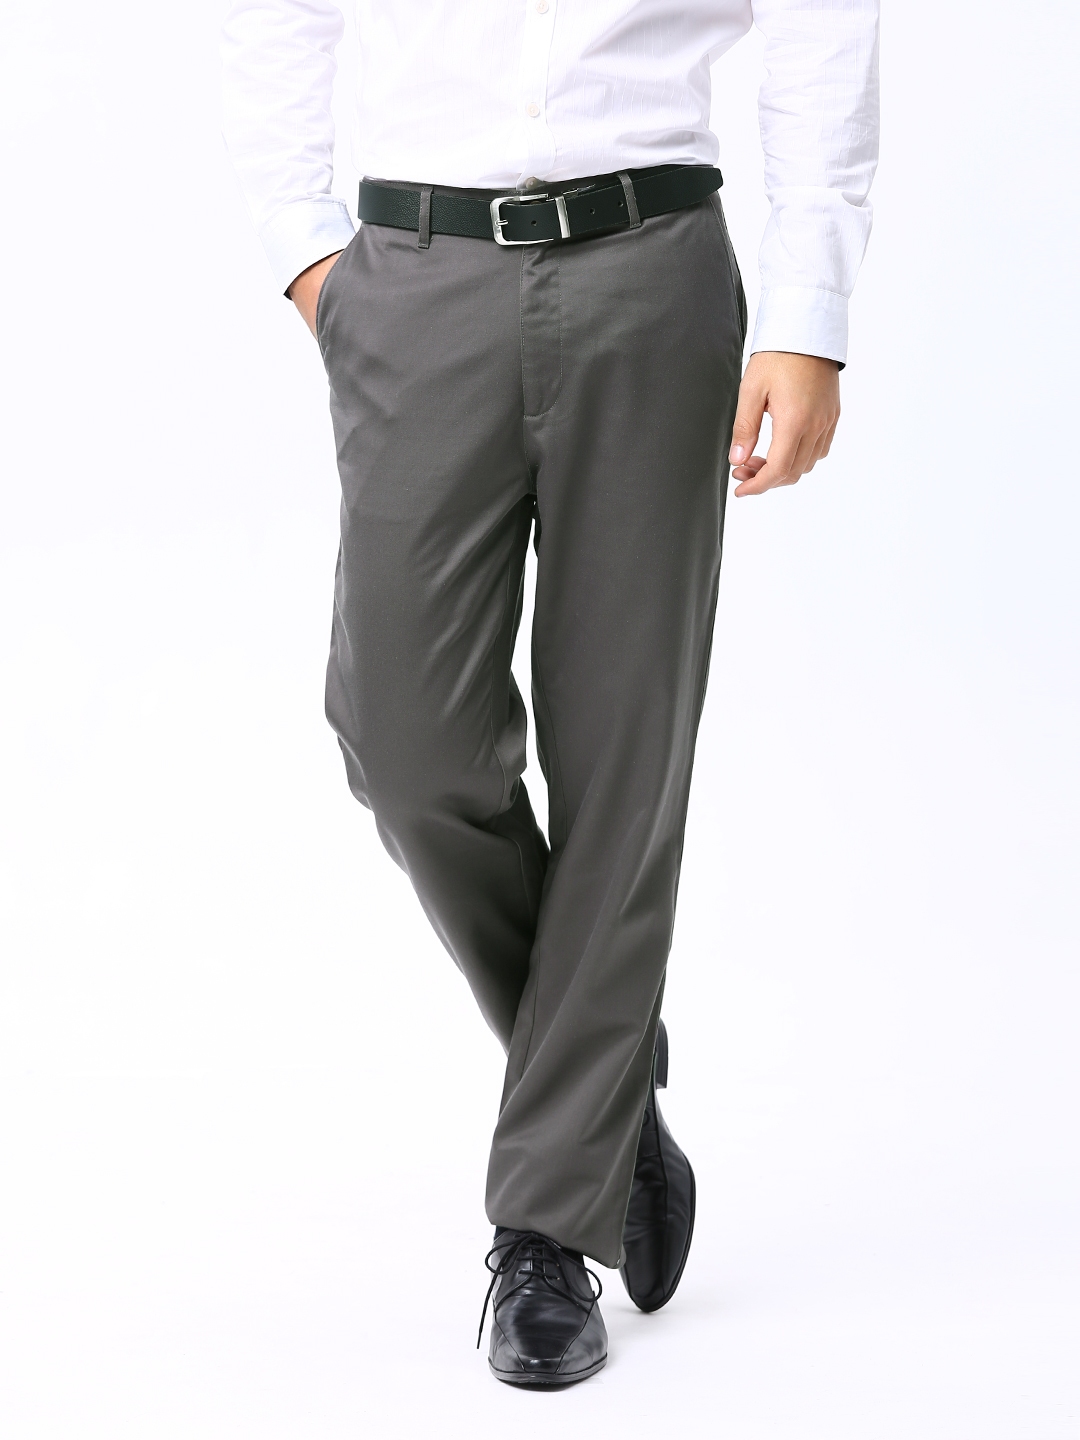 Buy poriff Mens Comfort Pants Linen Elastic Drawstring Waist Summer Beach  Pants Grey S at Amazonin